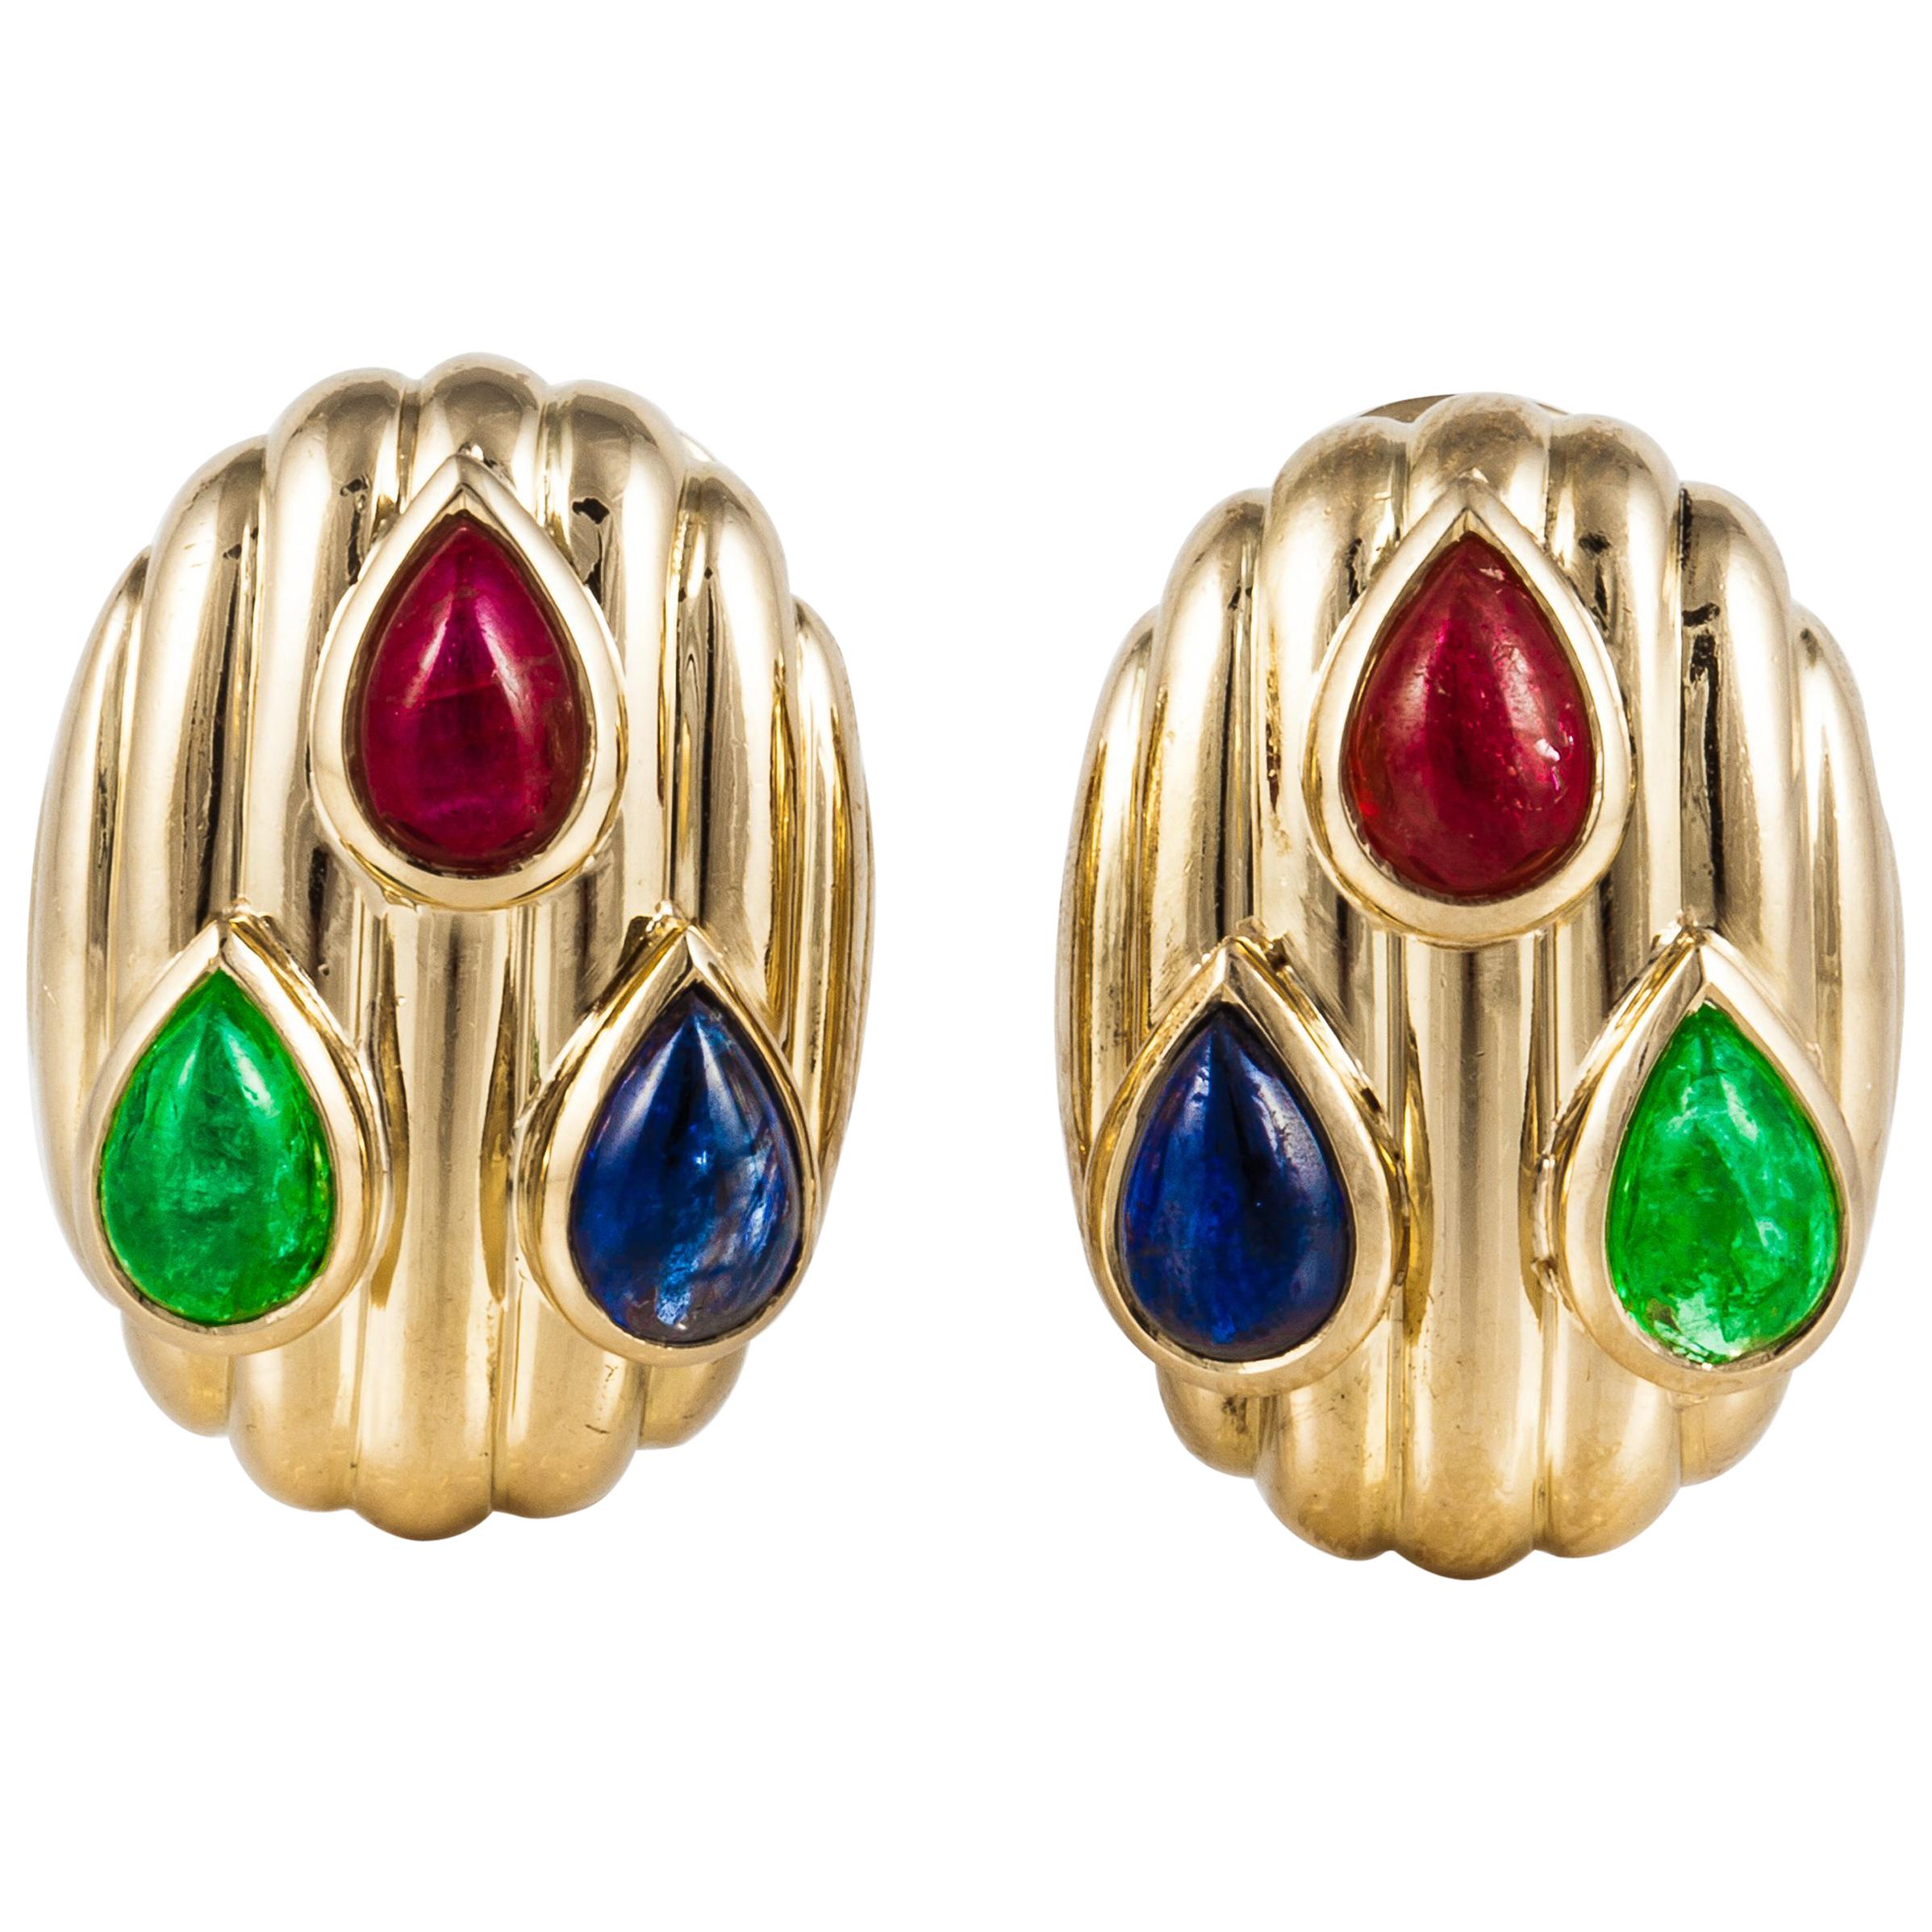 David Webb Sapphire Ruby and Emerald Earrings in 18K Gold